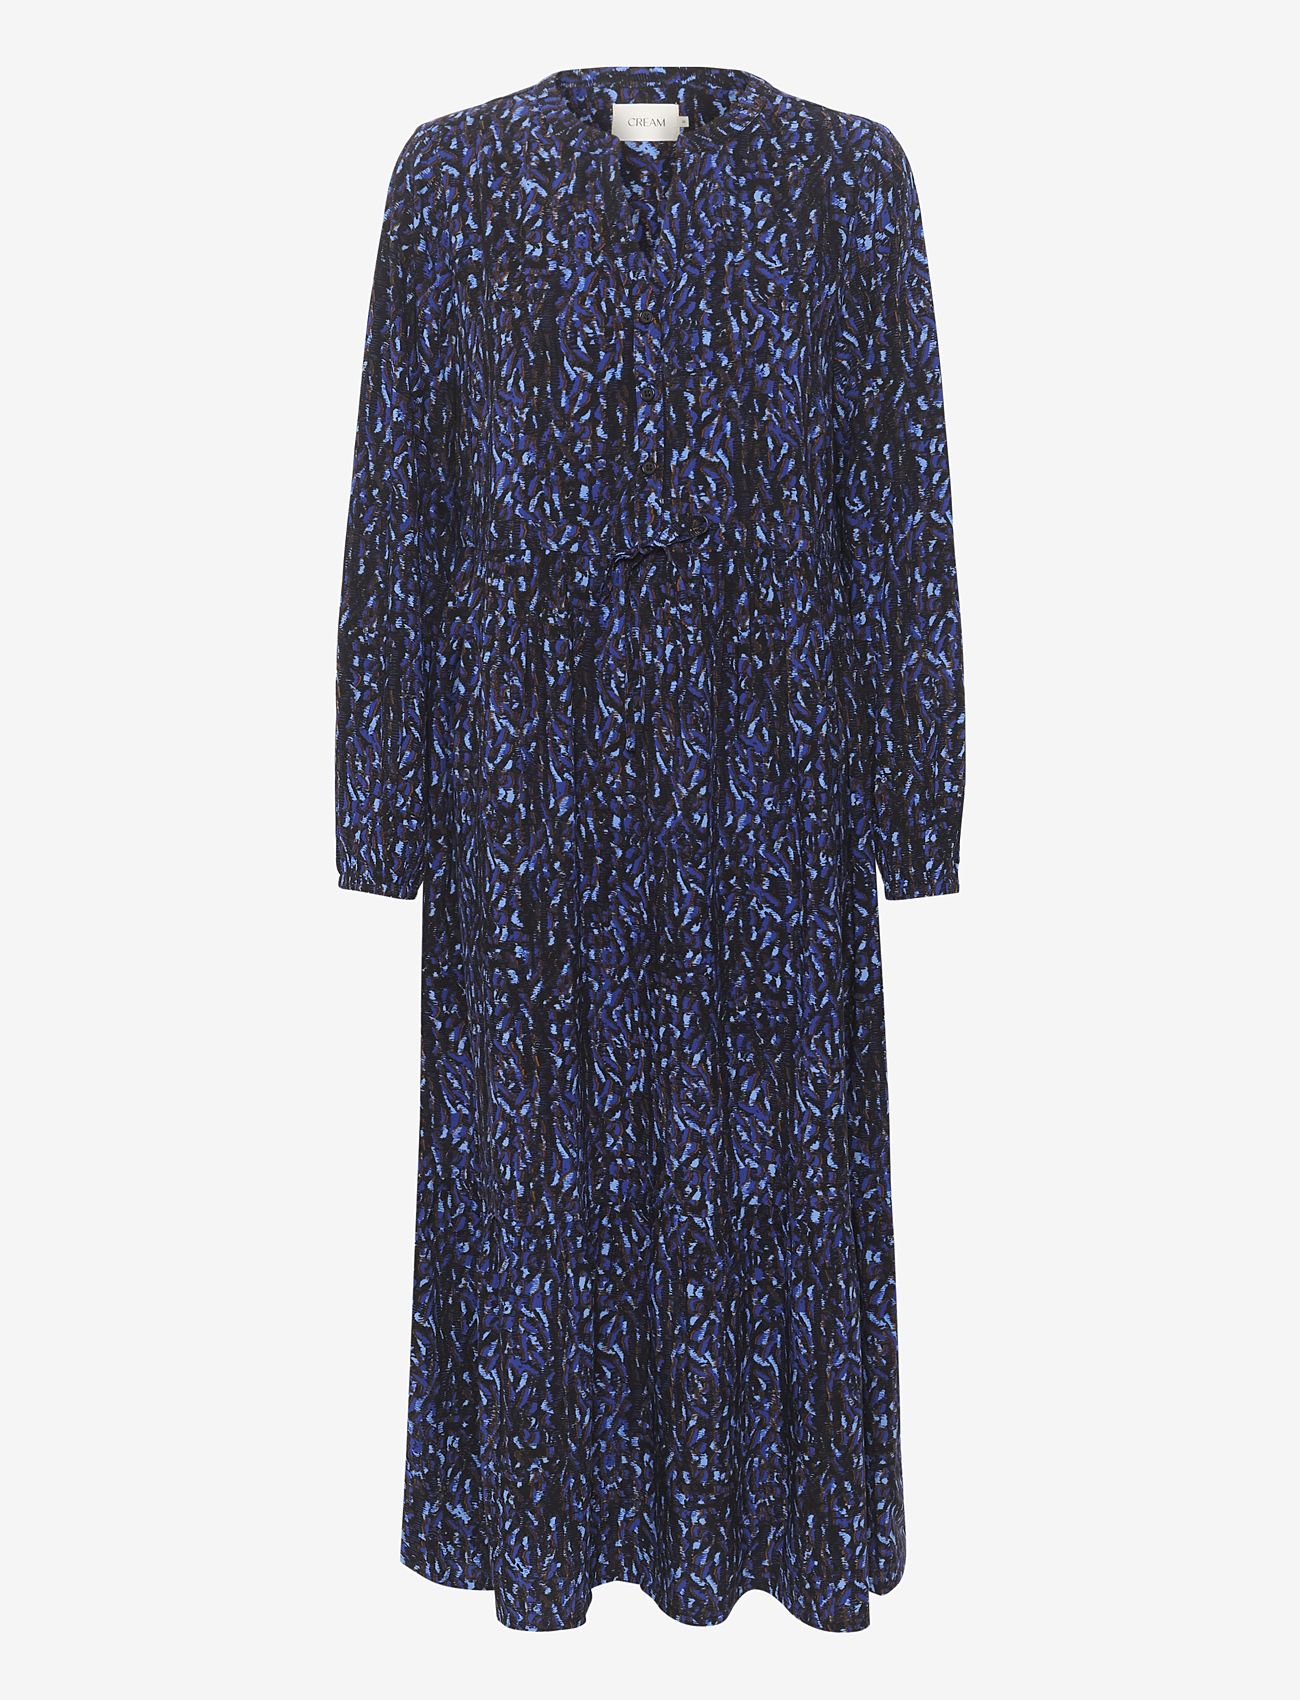 Cream - CRTiah Ankl Length Dress - Zally fit - kreklkleitas - mazarine blue/black print - 0